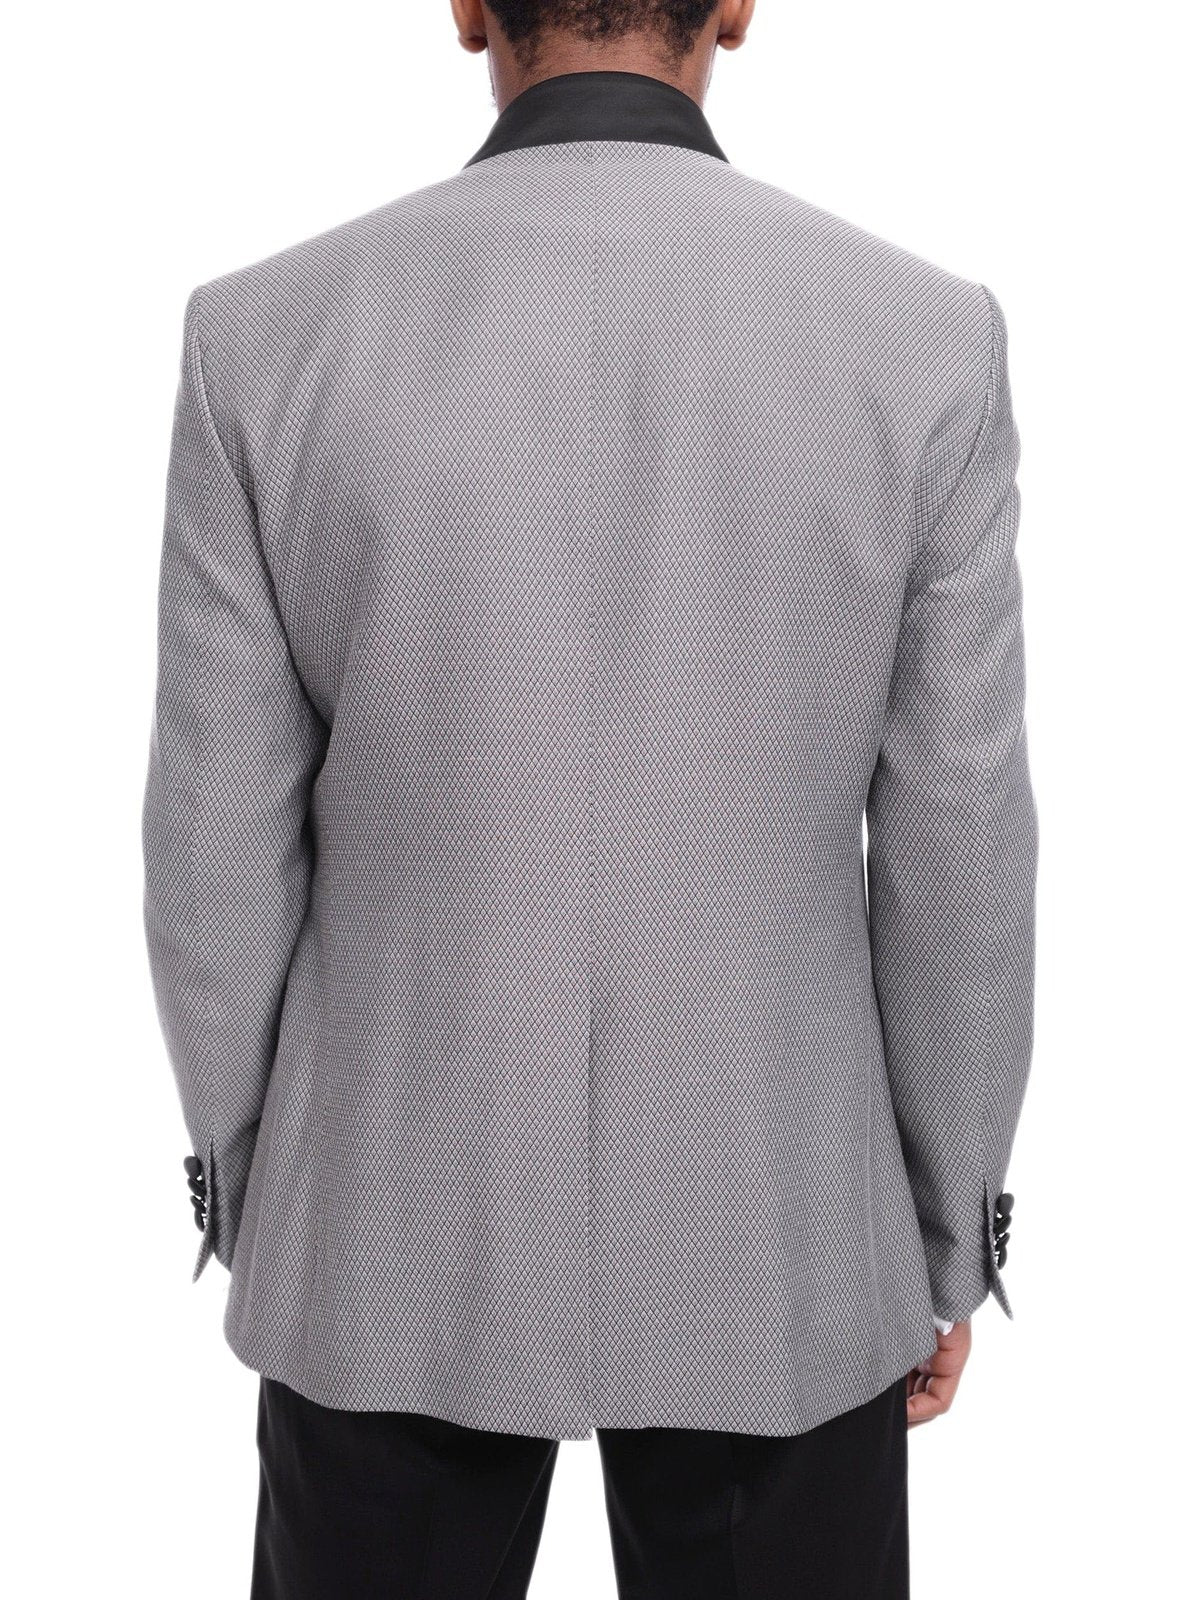 Cemden Sale Suits Cemden Slim Fit Silver Link Front Satin Tuxedo Suit Mandarin Collar Shawl Lapels